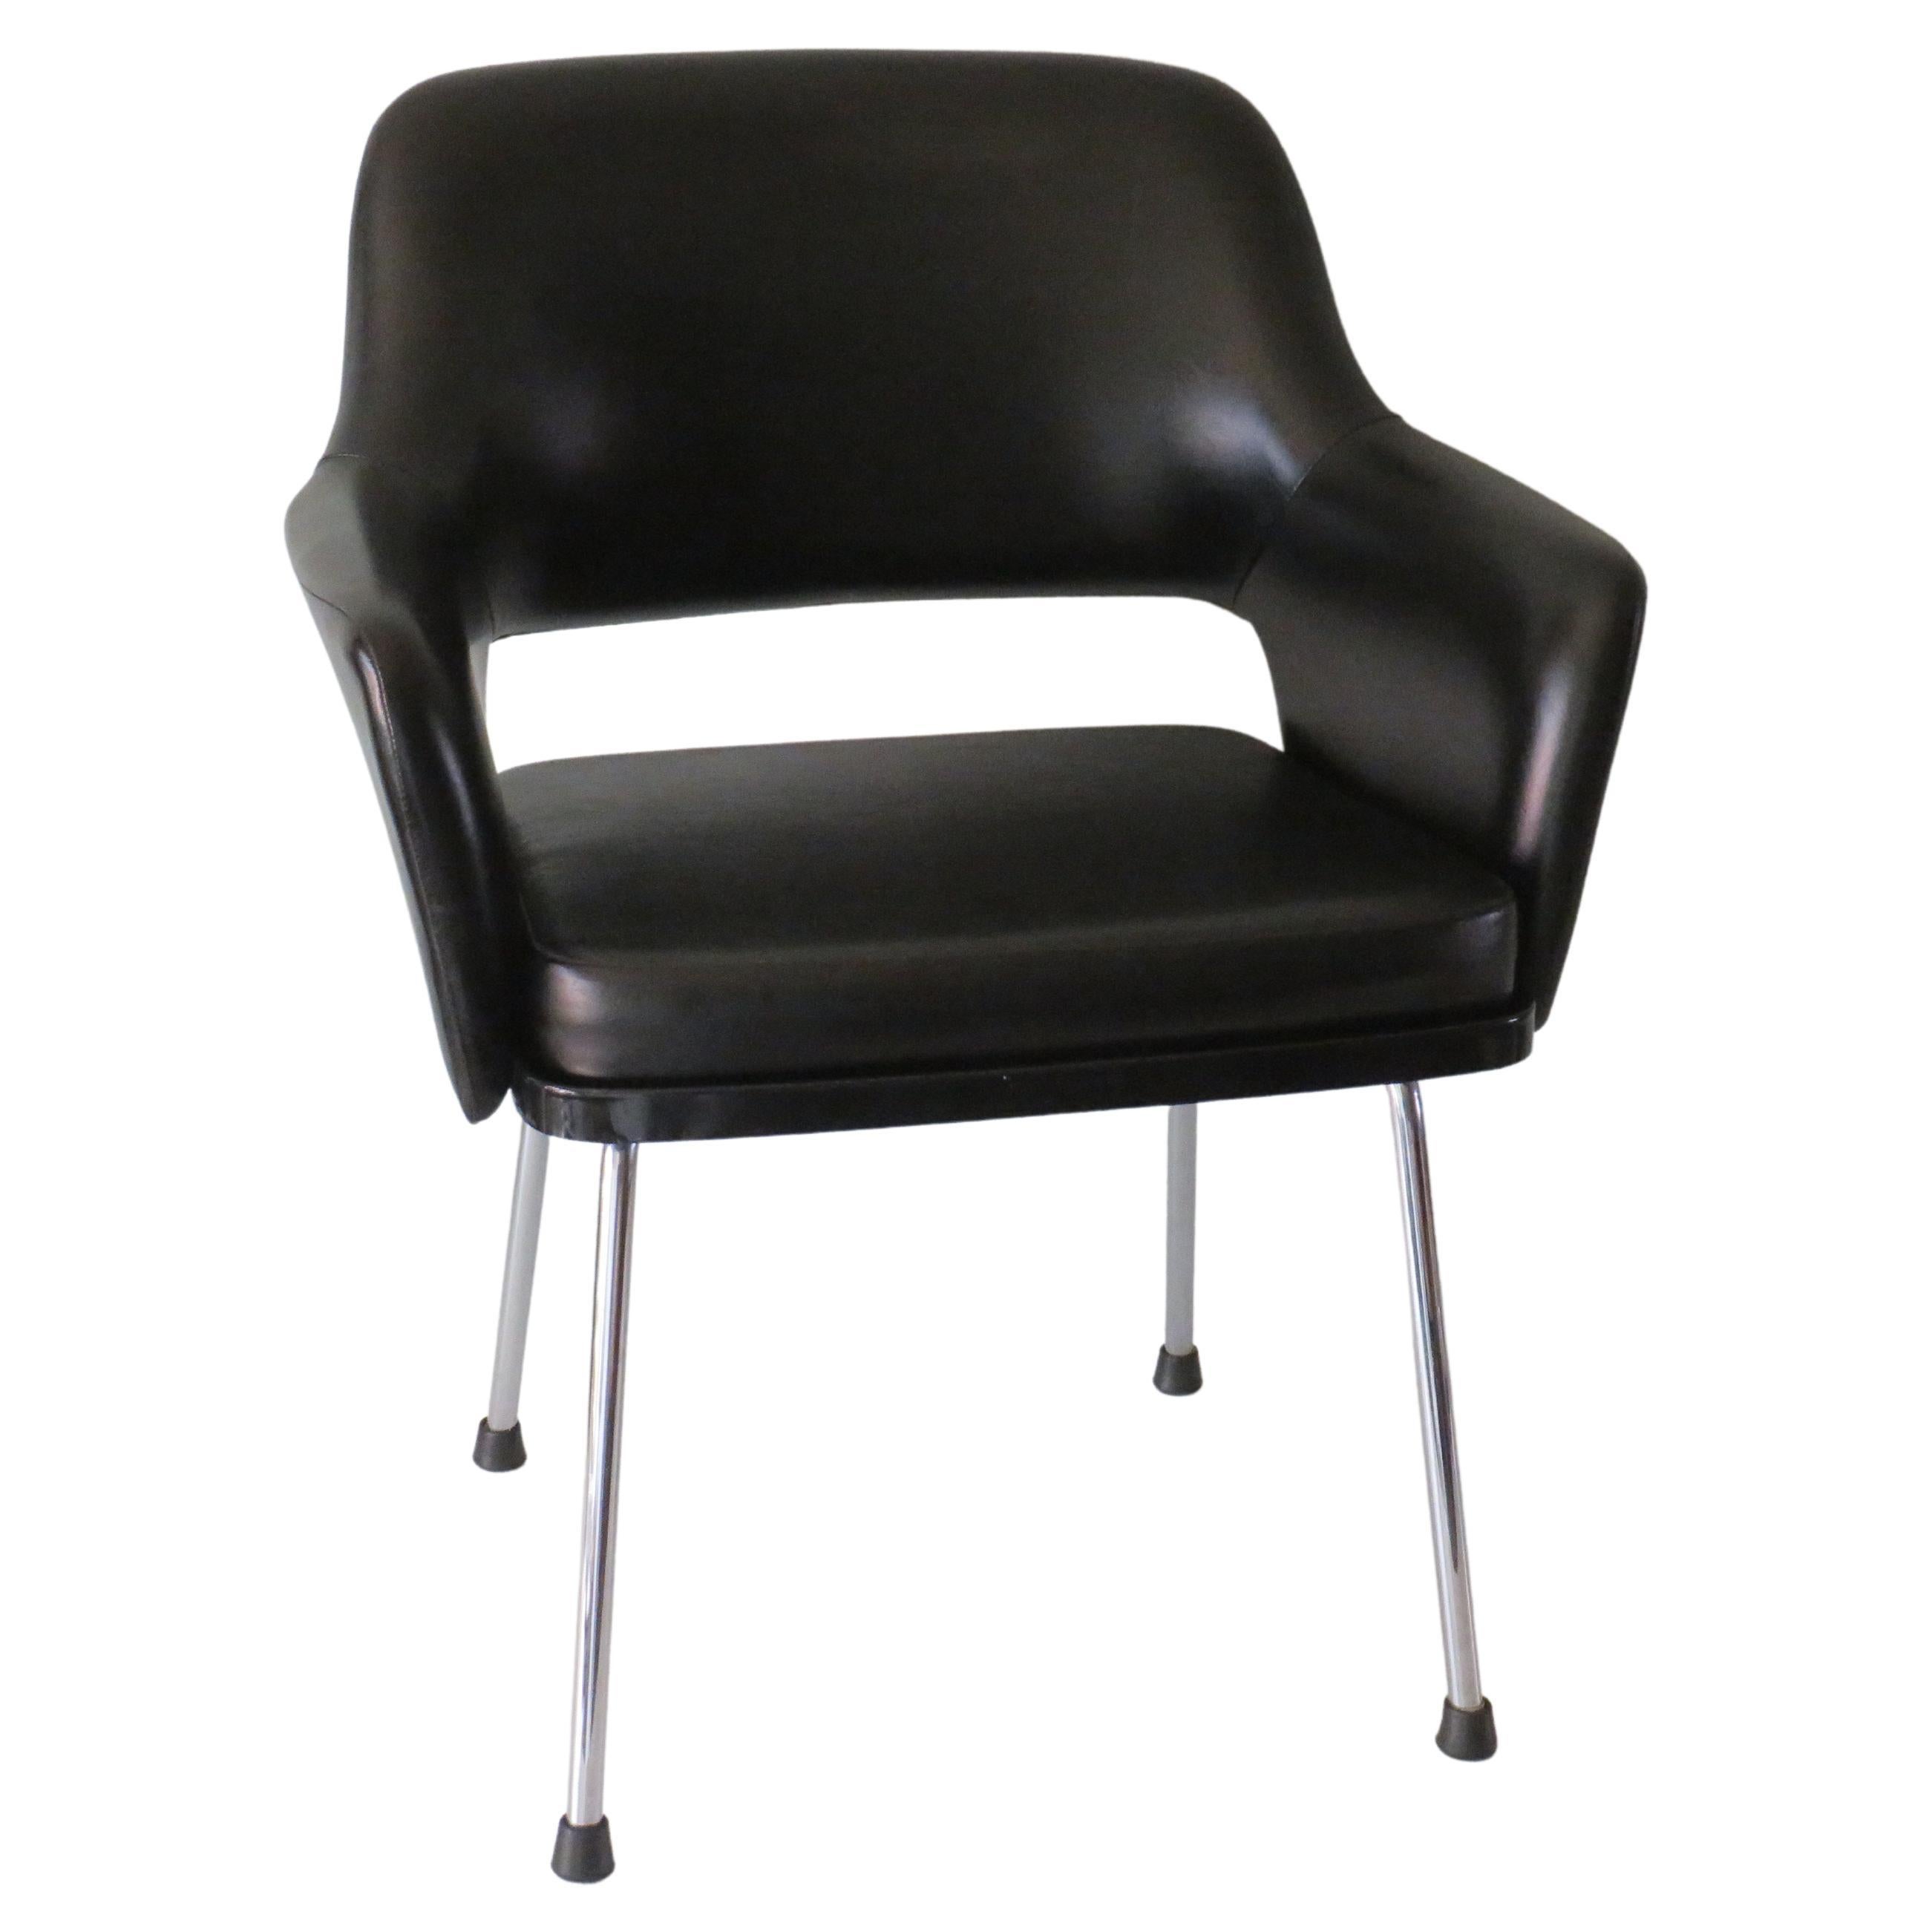 Modernist Armrest Chair, Chrome and Skai, Belgium 1960s For Sale